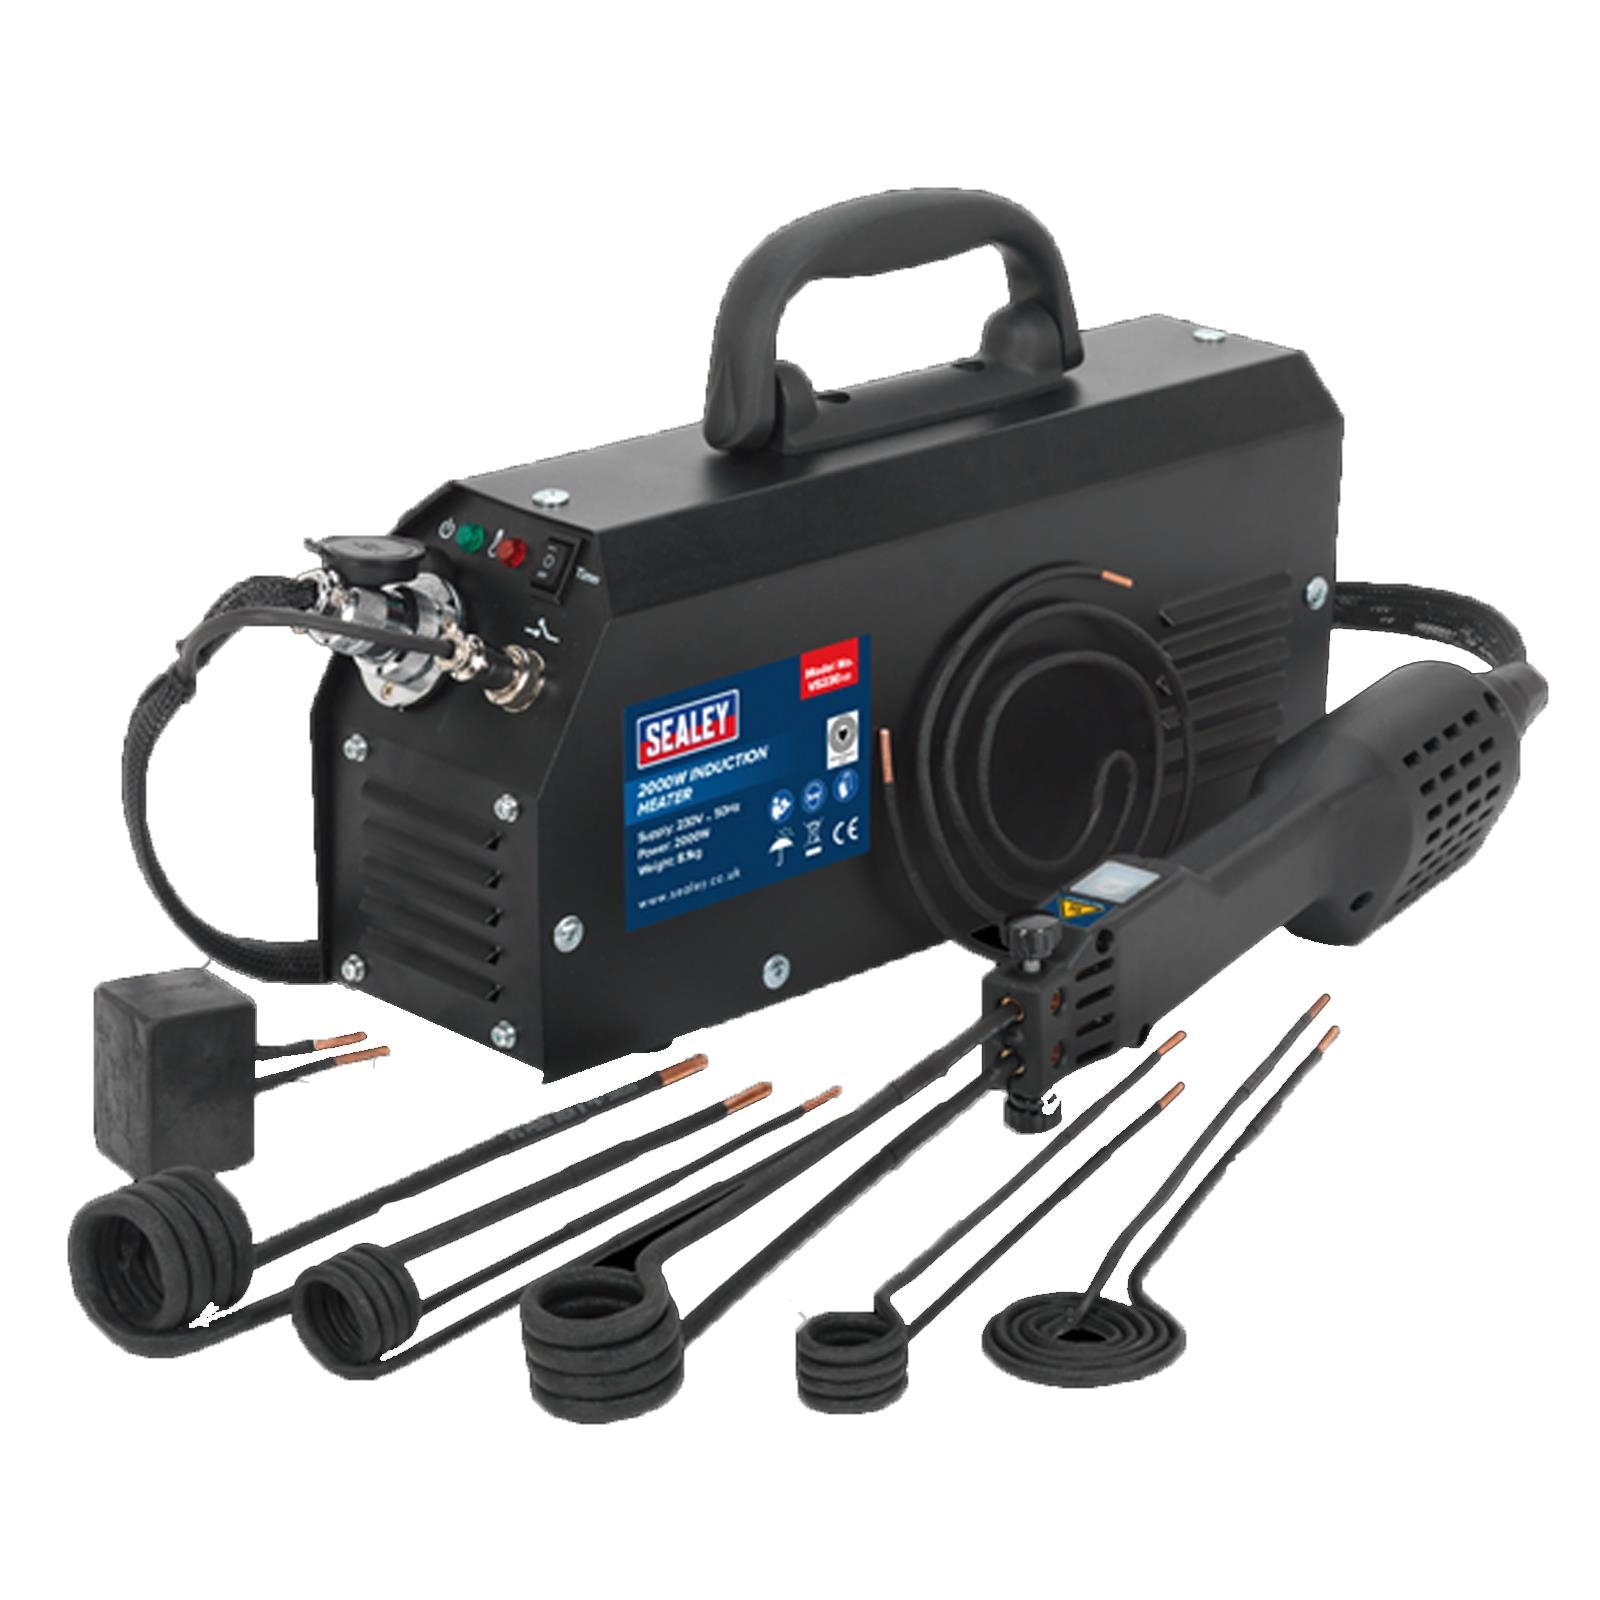 Sealey VS230 Induction Heater 2000W Coil gun Tool Car Van Garage Workshop